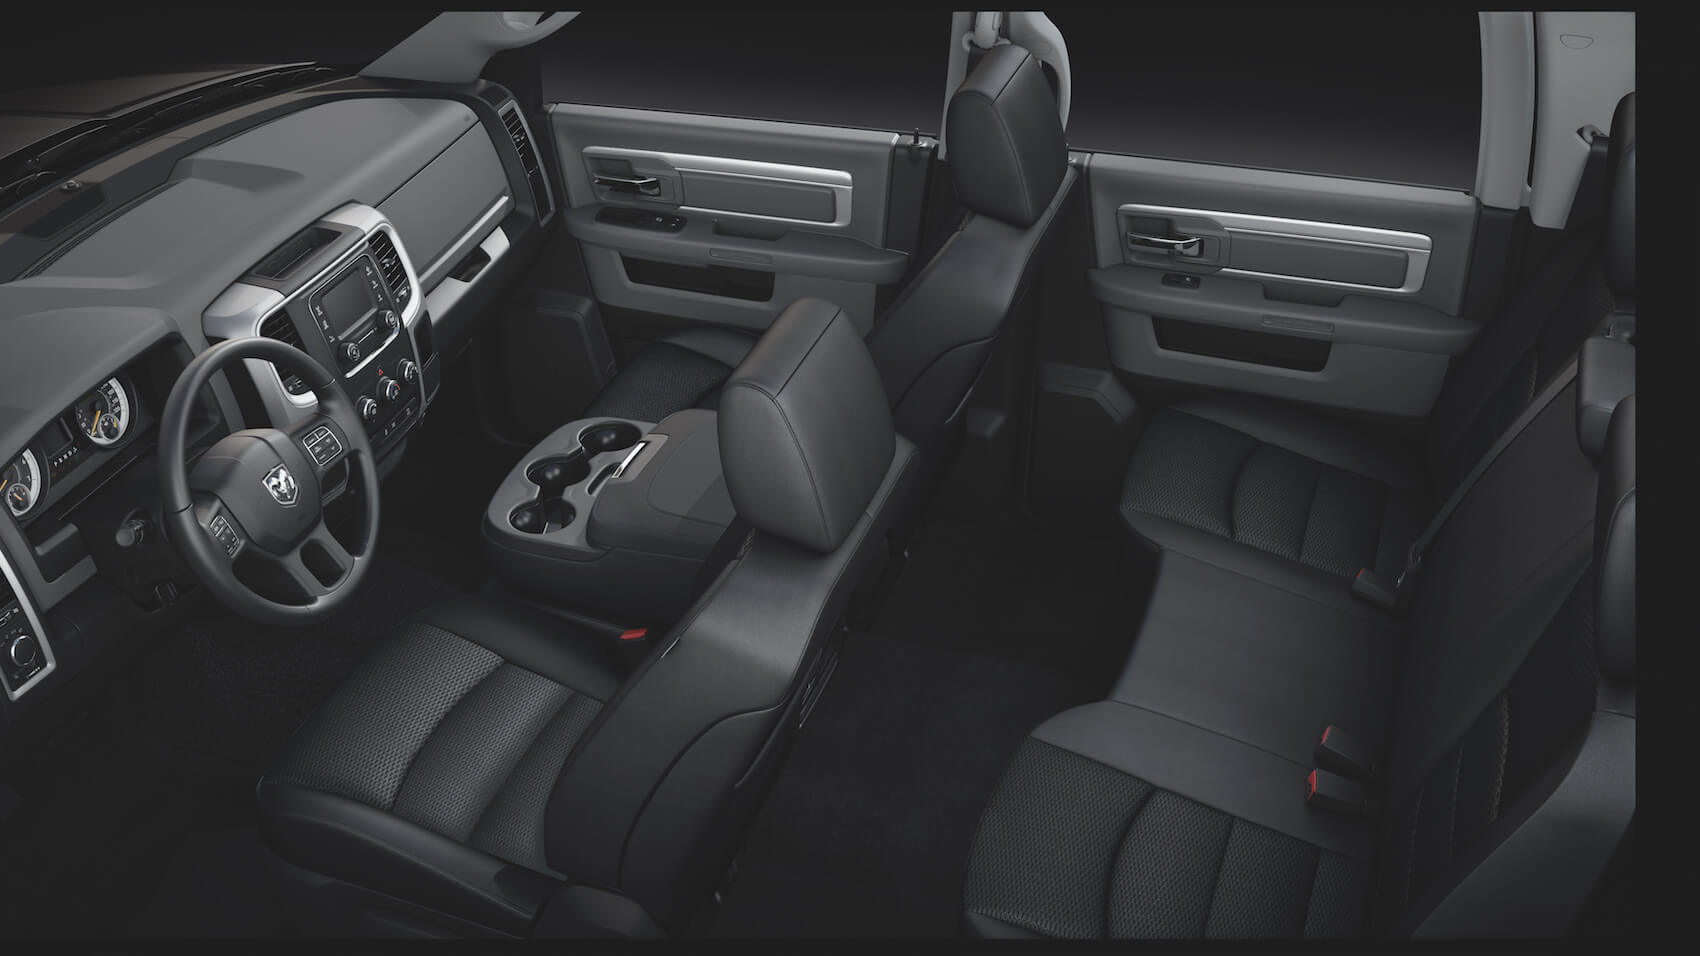 2021 Ram 1500 interior comfort